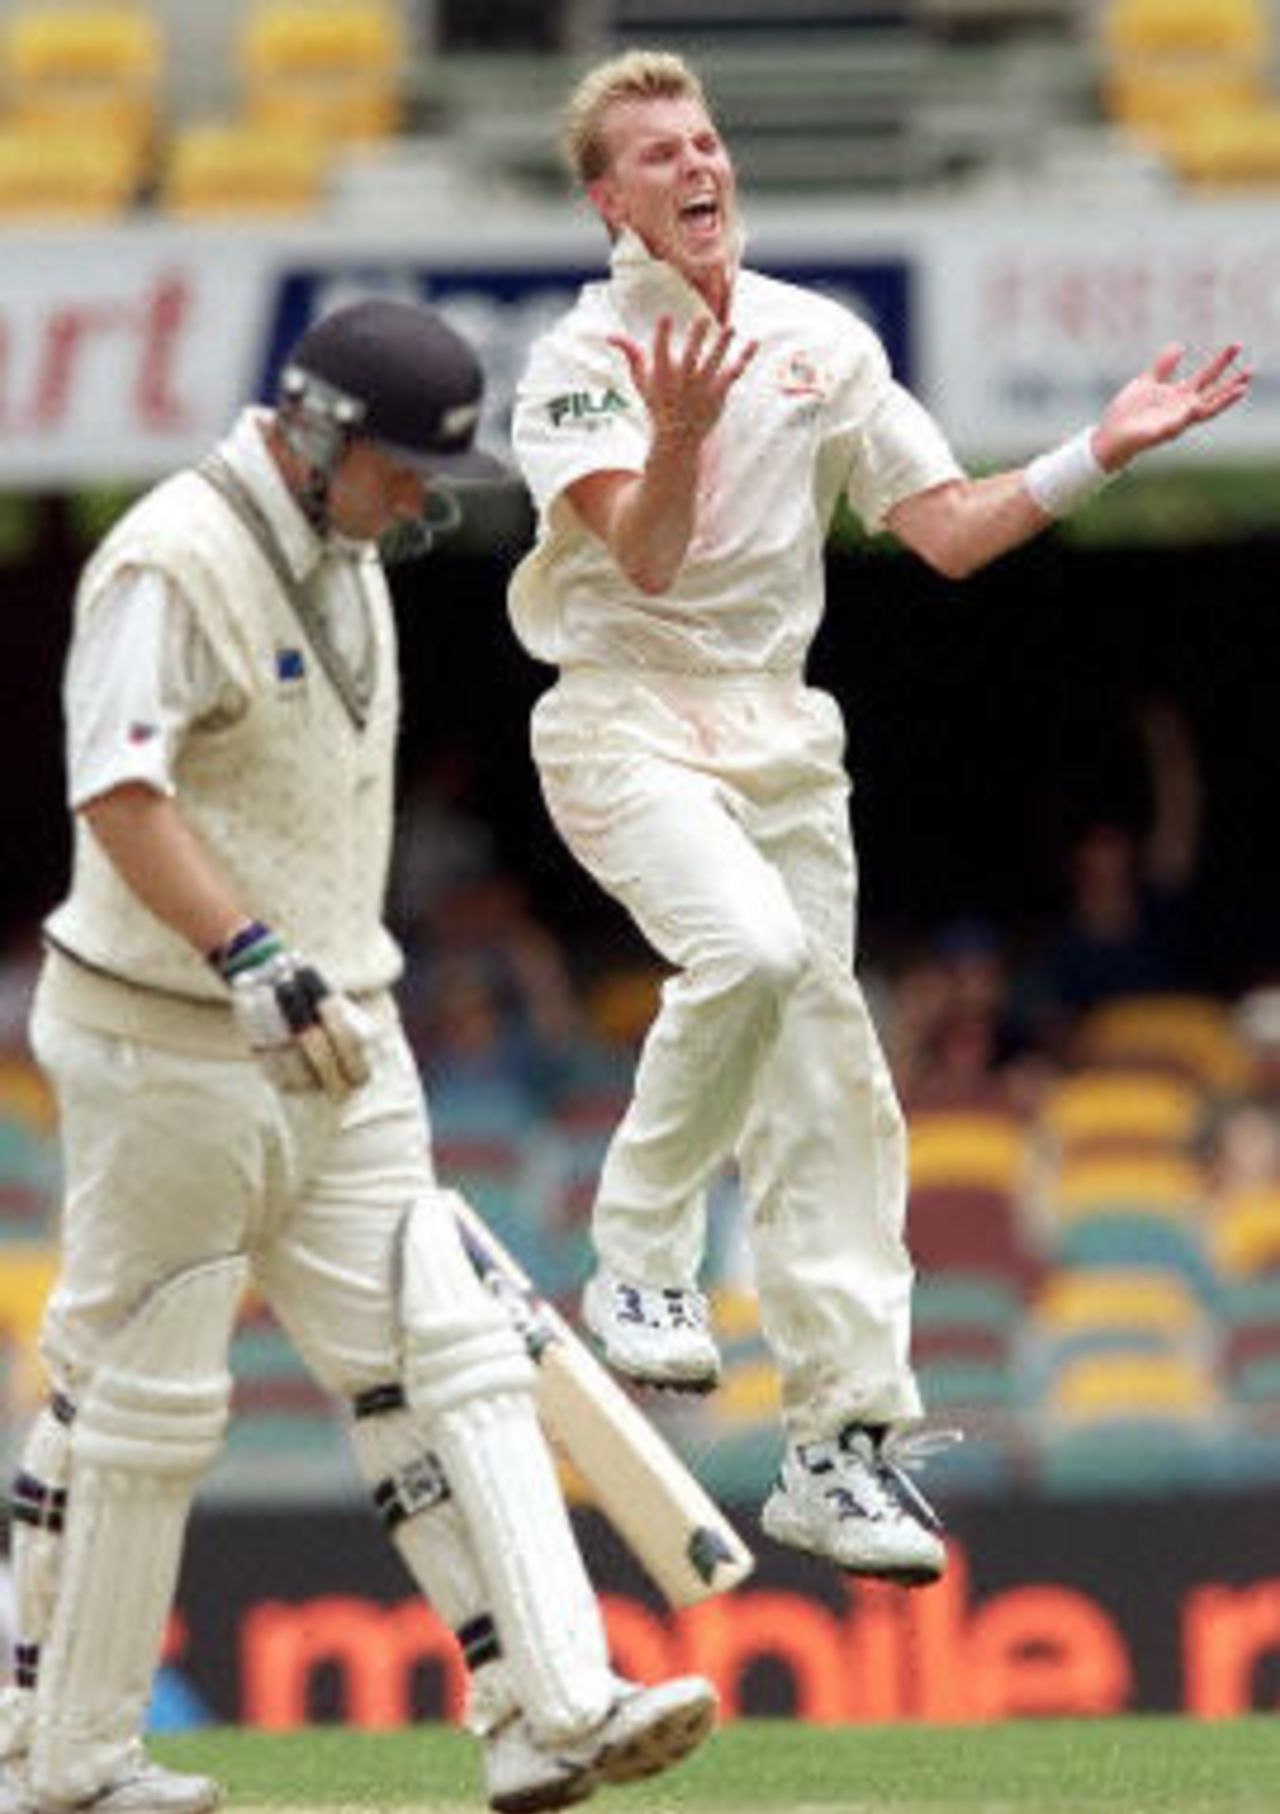 Australia v New Zealand, 1st Test, Trans Tasman Trophy, 2001-2, Brisbane Cricket Ground Woolloongabba, 8-12 Nov, 2001